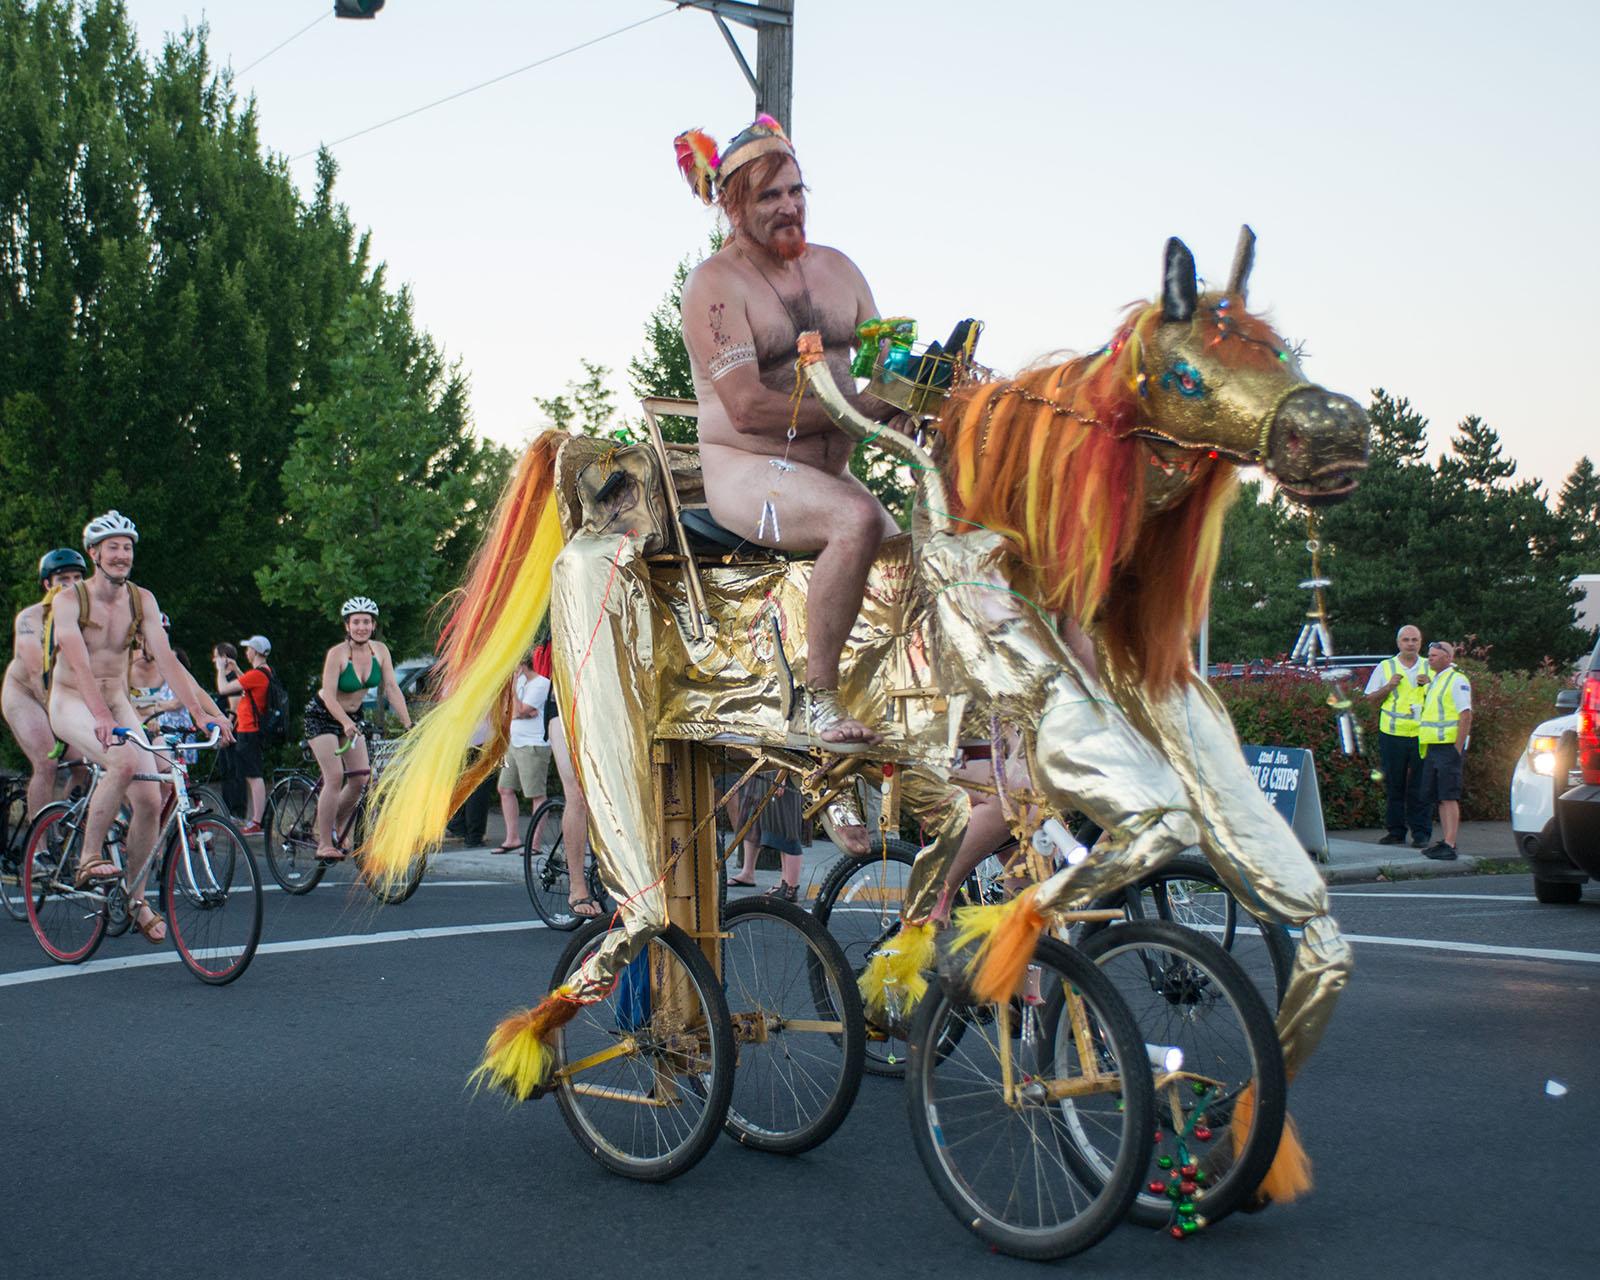 World Naked Bike Ride returns to Portland | KATU